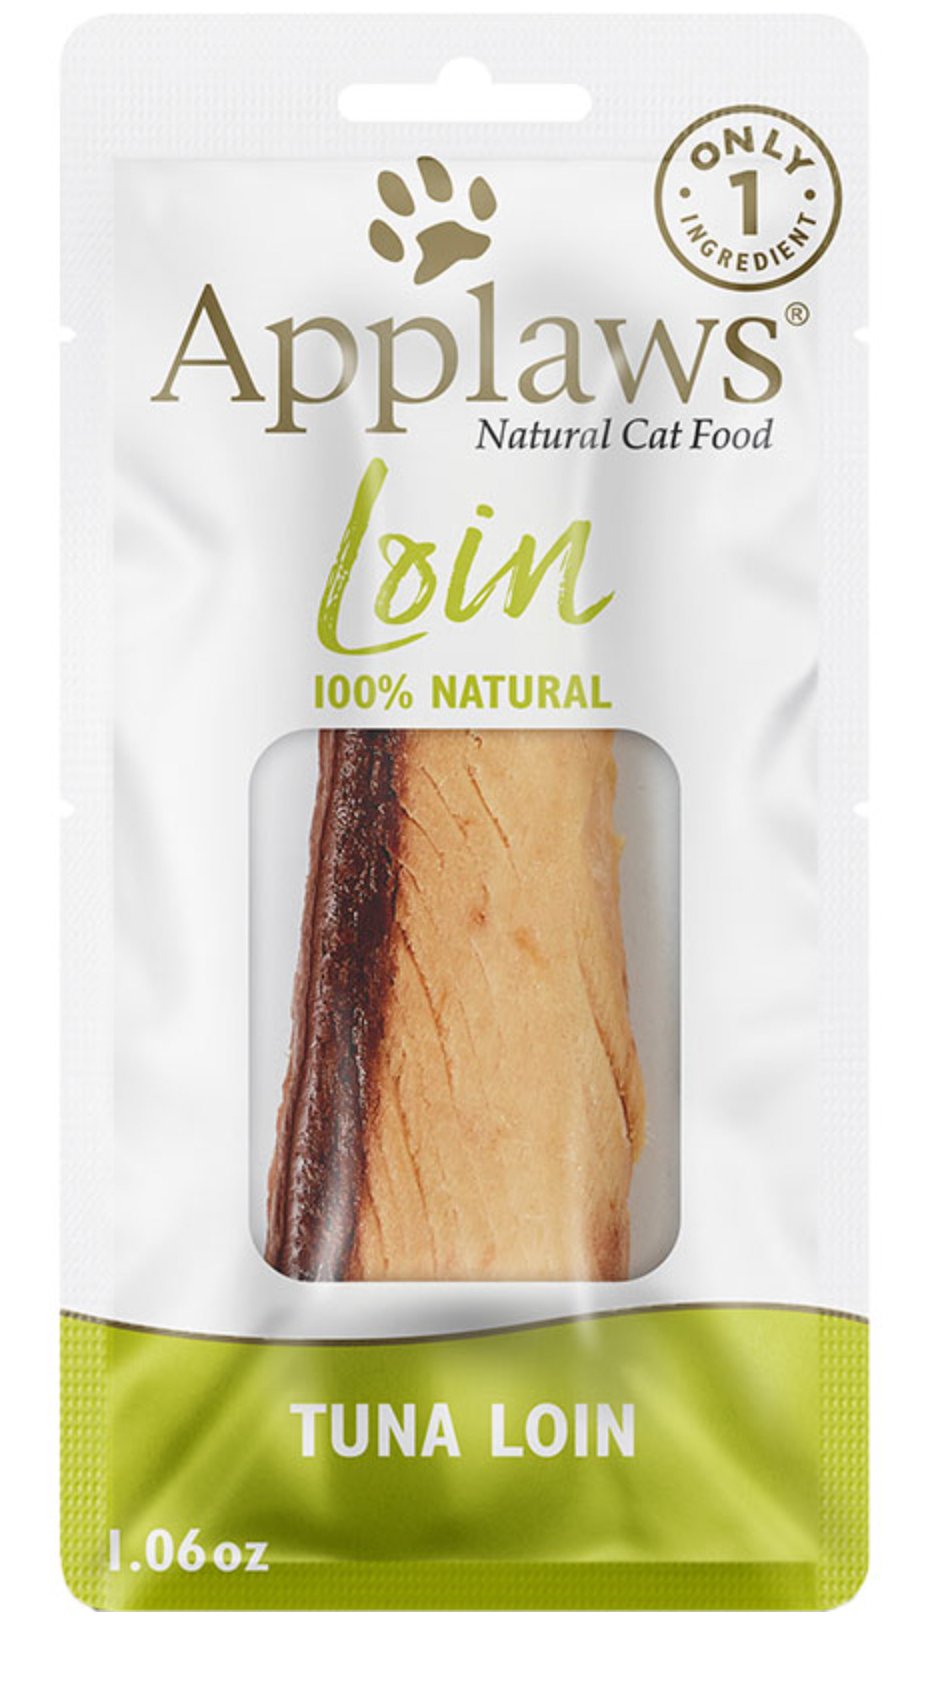 Applaws 100% Natural Tuna Loin, 1.06 oz.